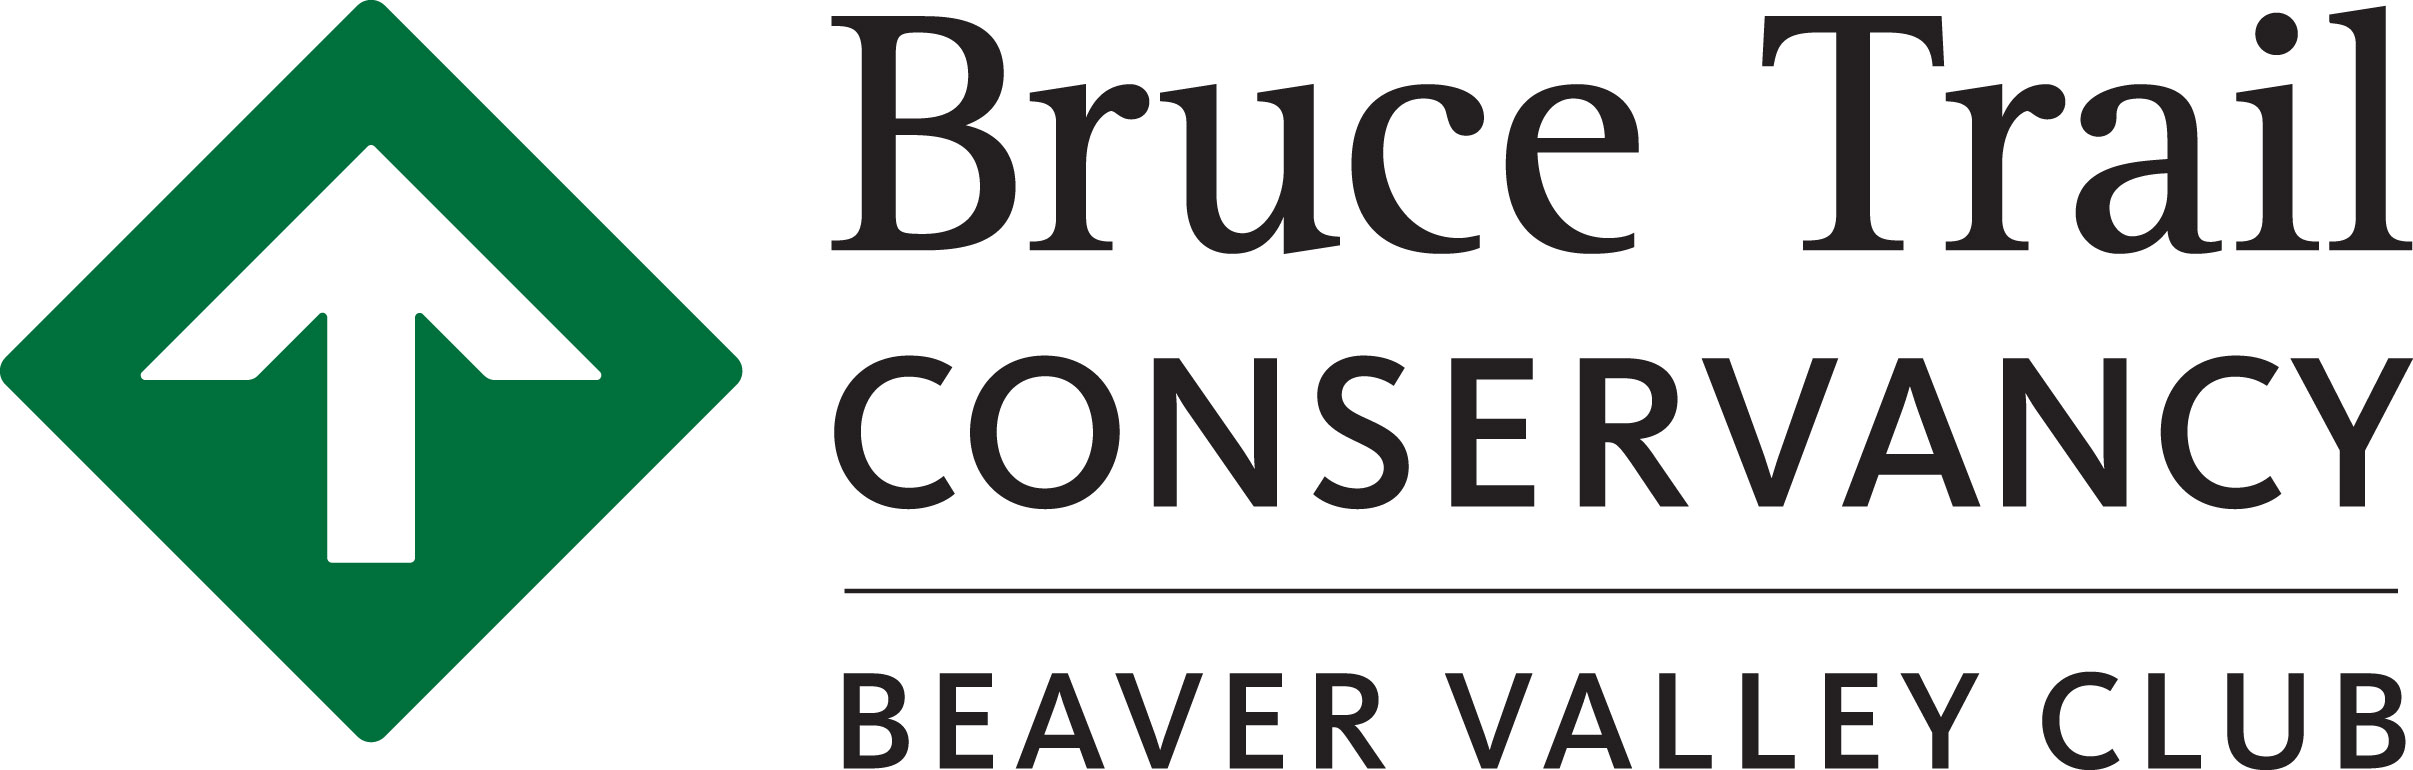 Beaver Valley Bruce Trail Club